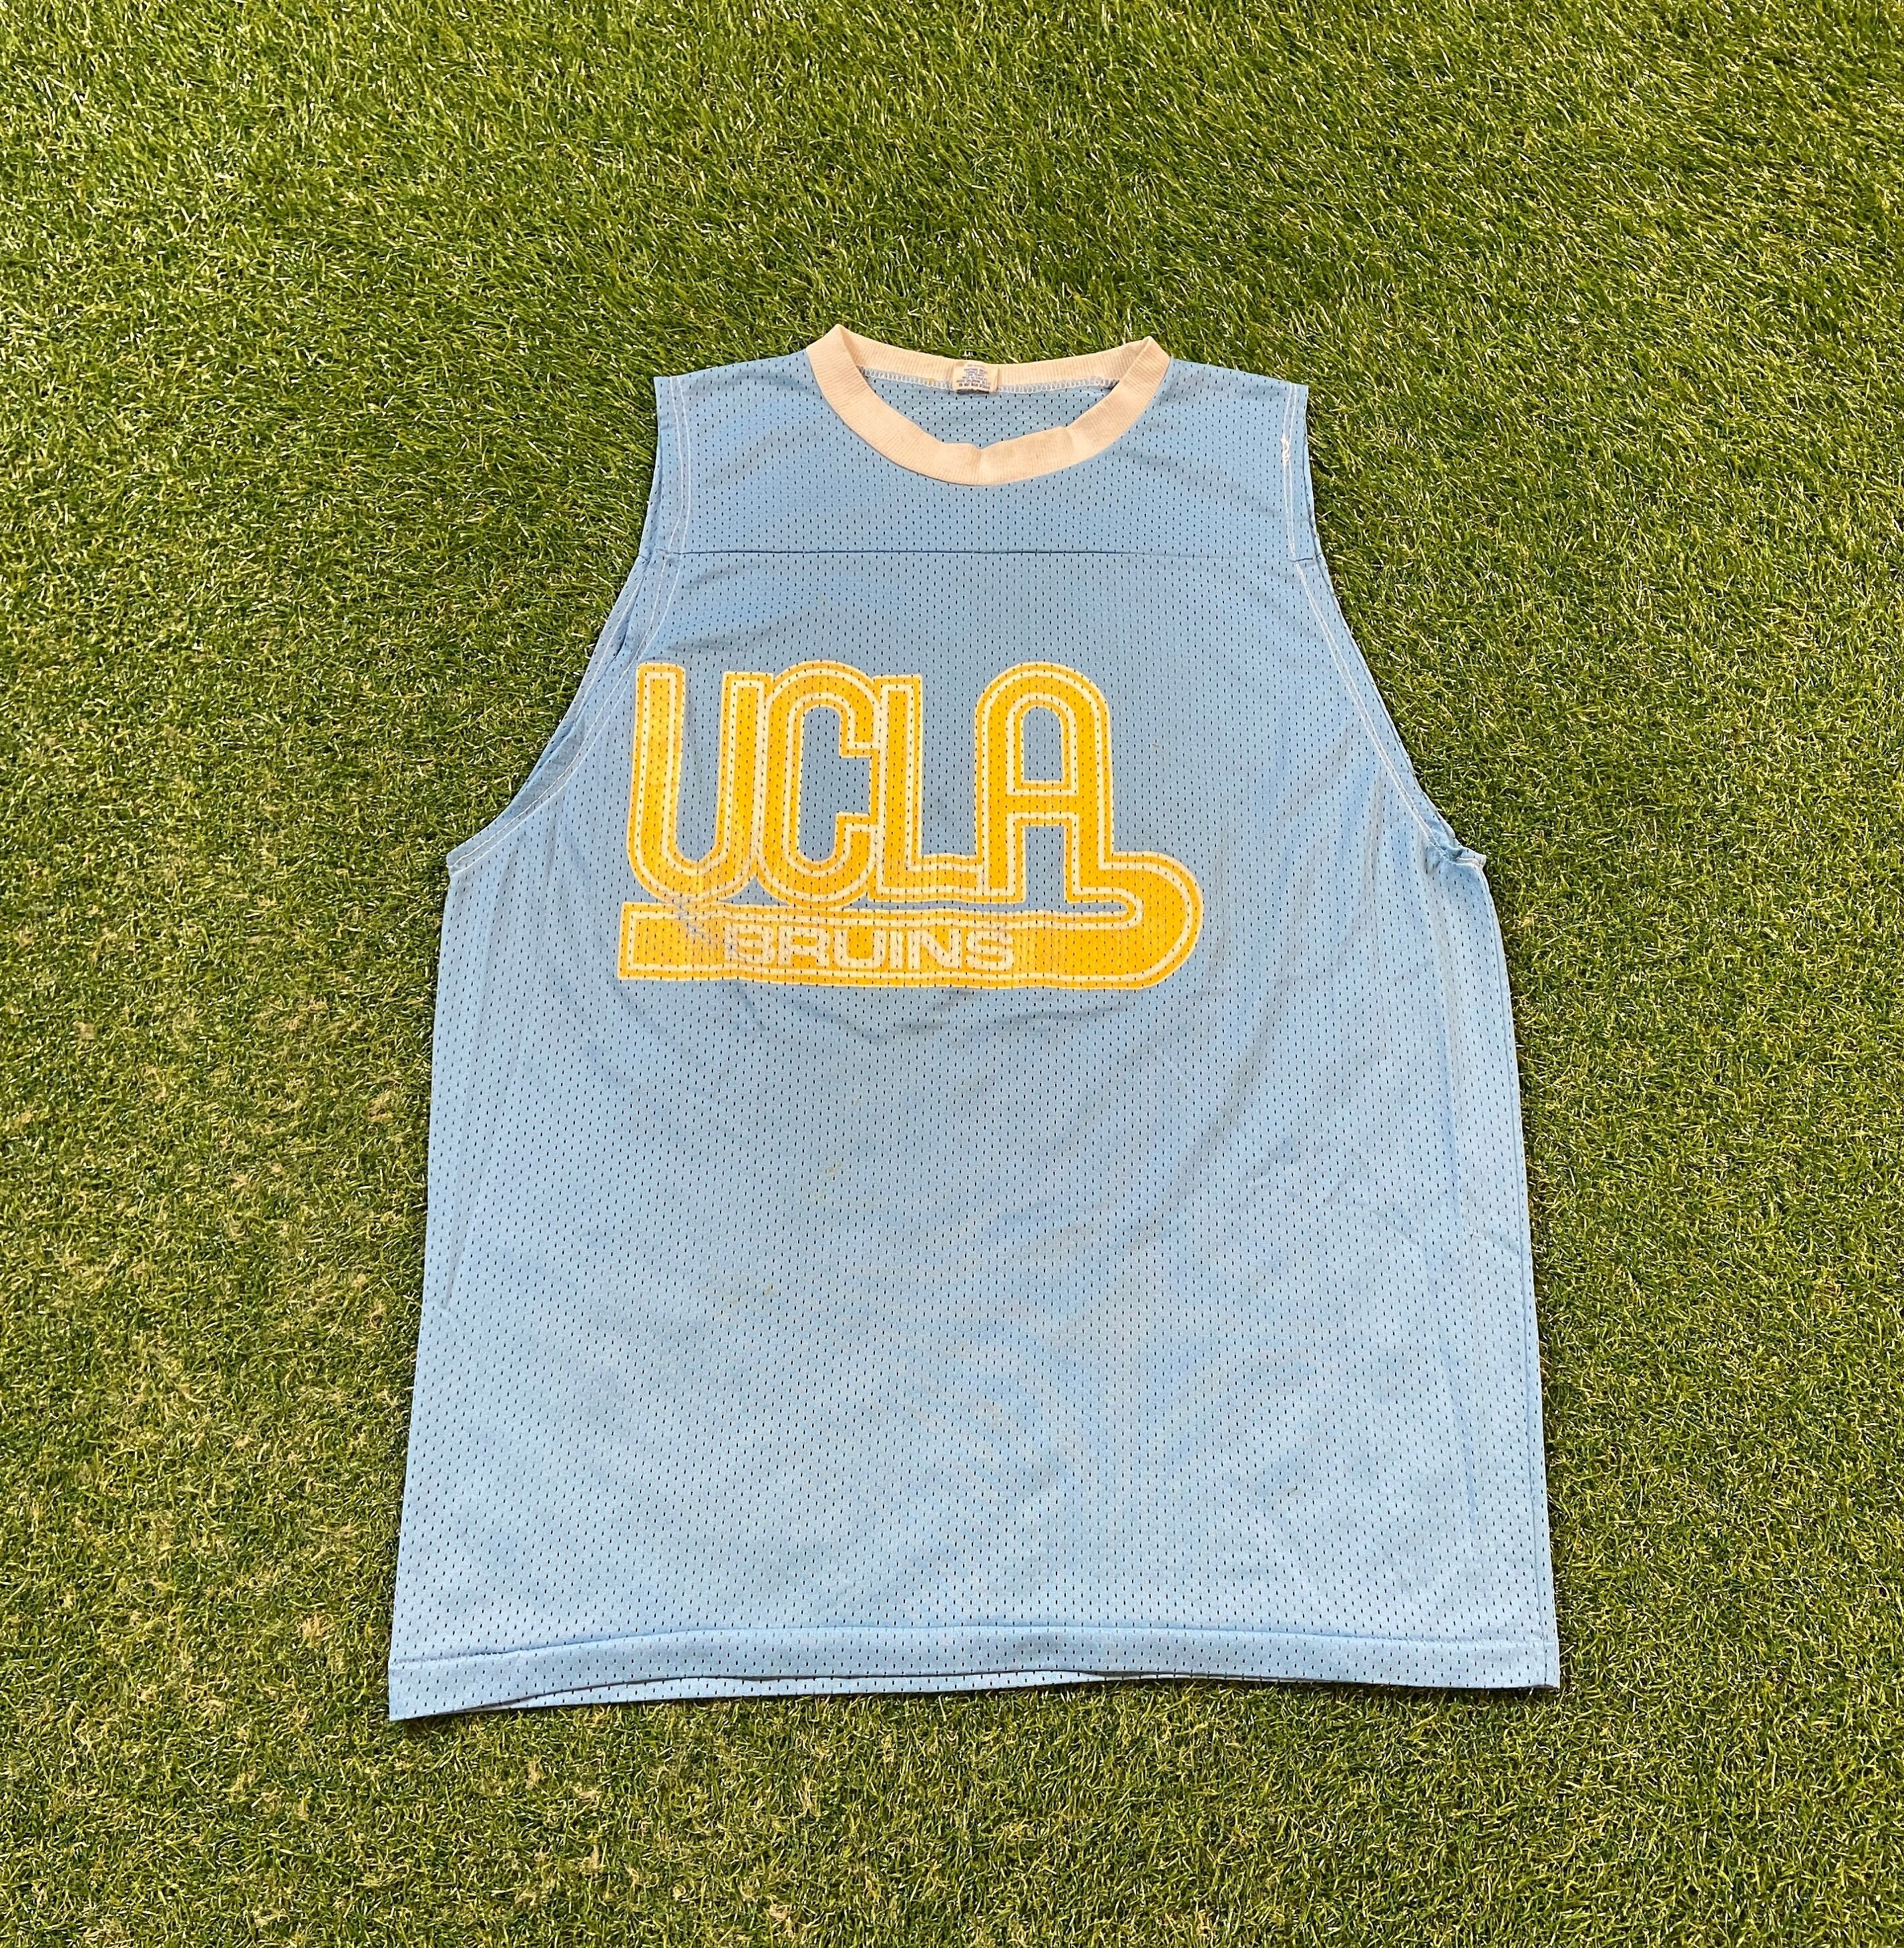 ucla basketball jersey youth - full-dye custom Basketball uniform